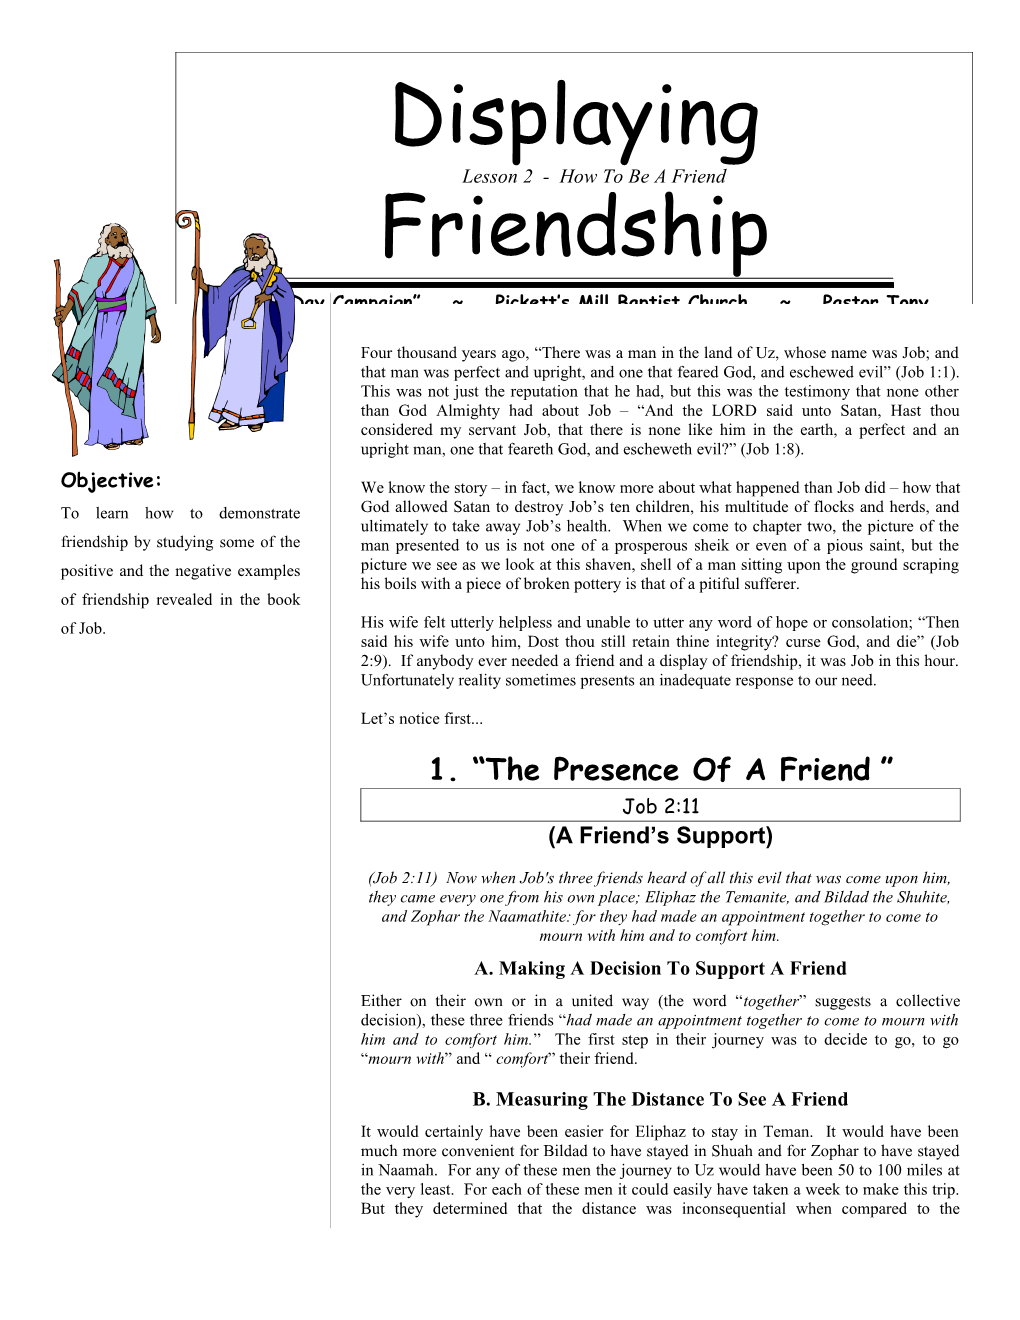 Defining Friendship - Page - 1